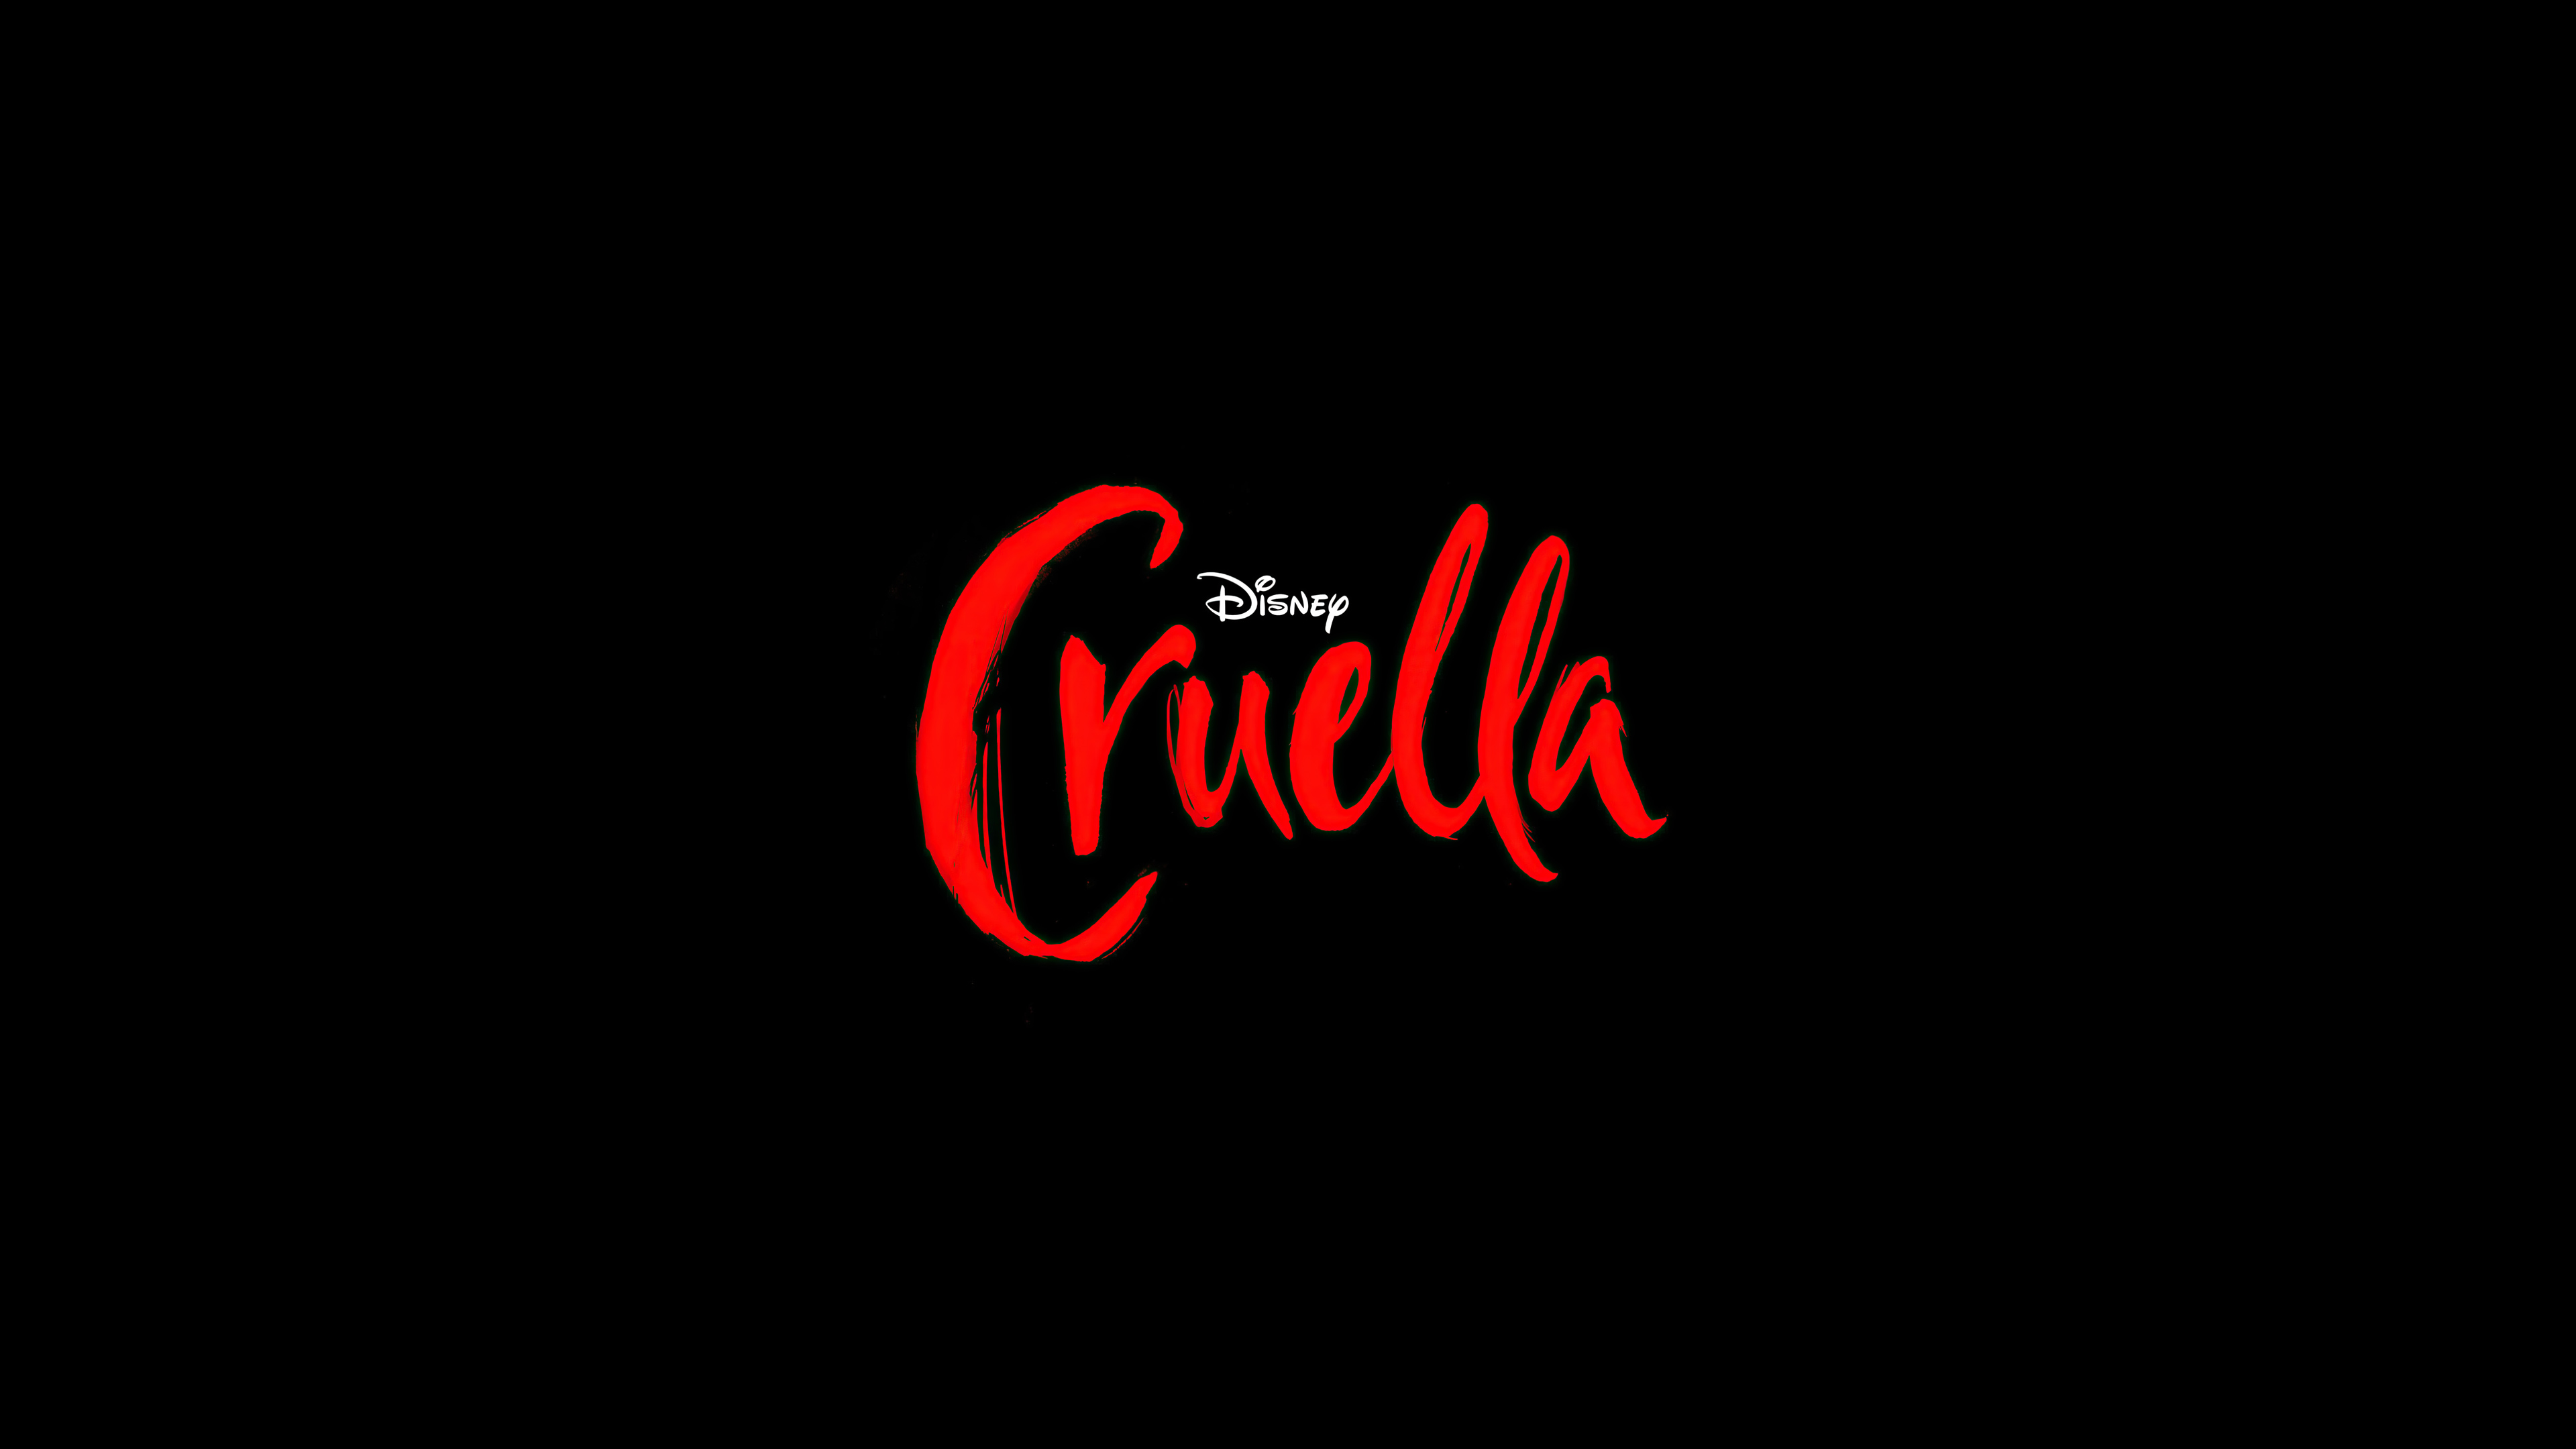 Cruella 4K Wallpapers